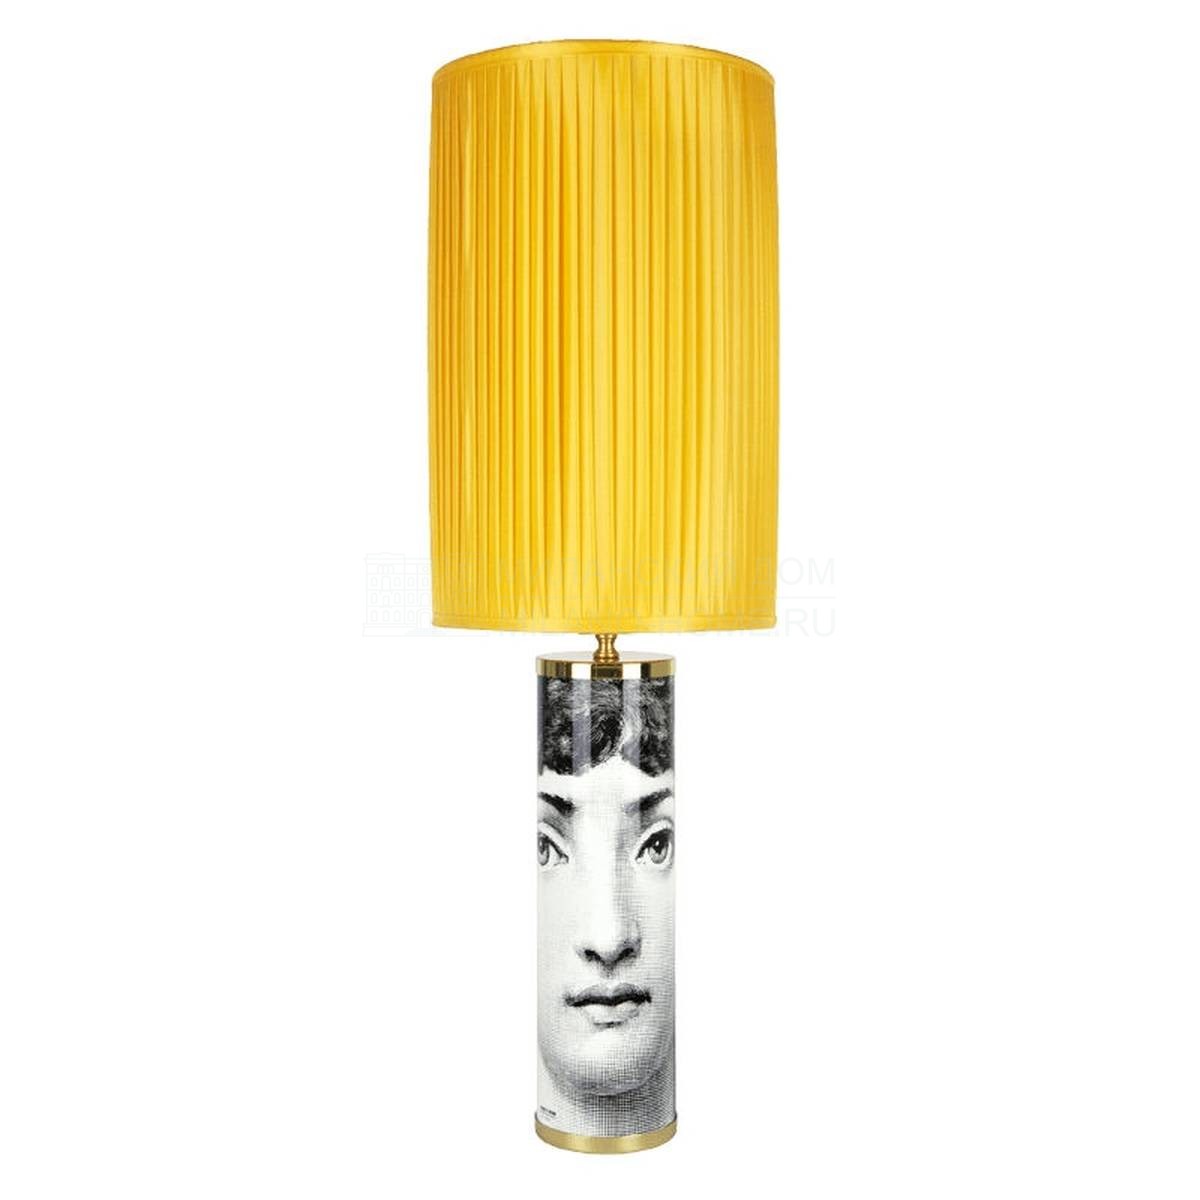 Настольная лампа Viso из Италии фабрики FORNASETTI